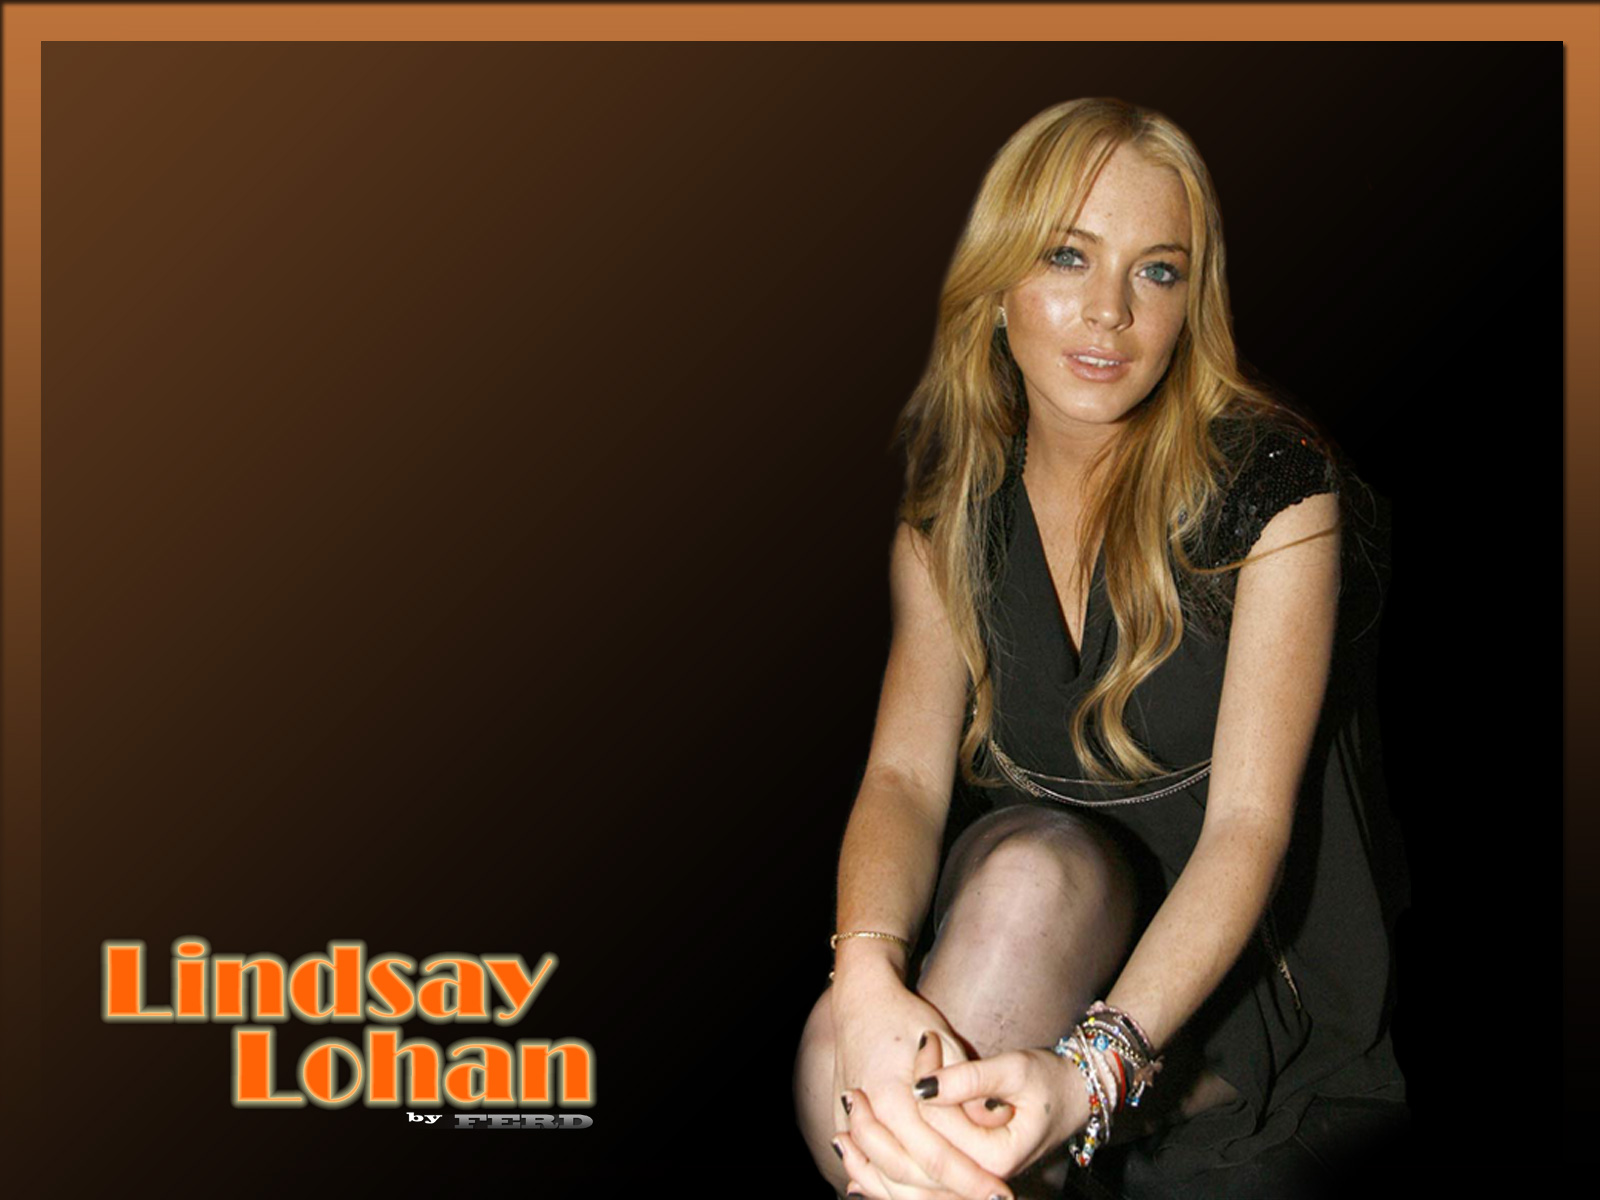 Lindsay lohan wallpaper 81